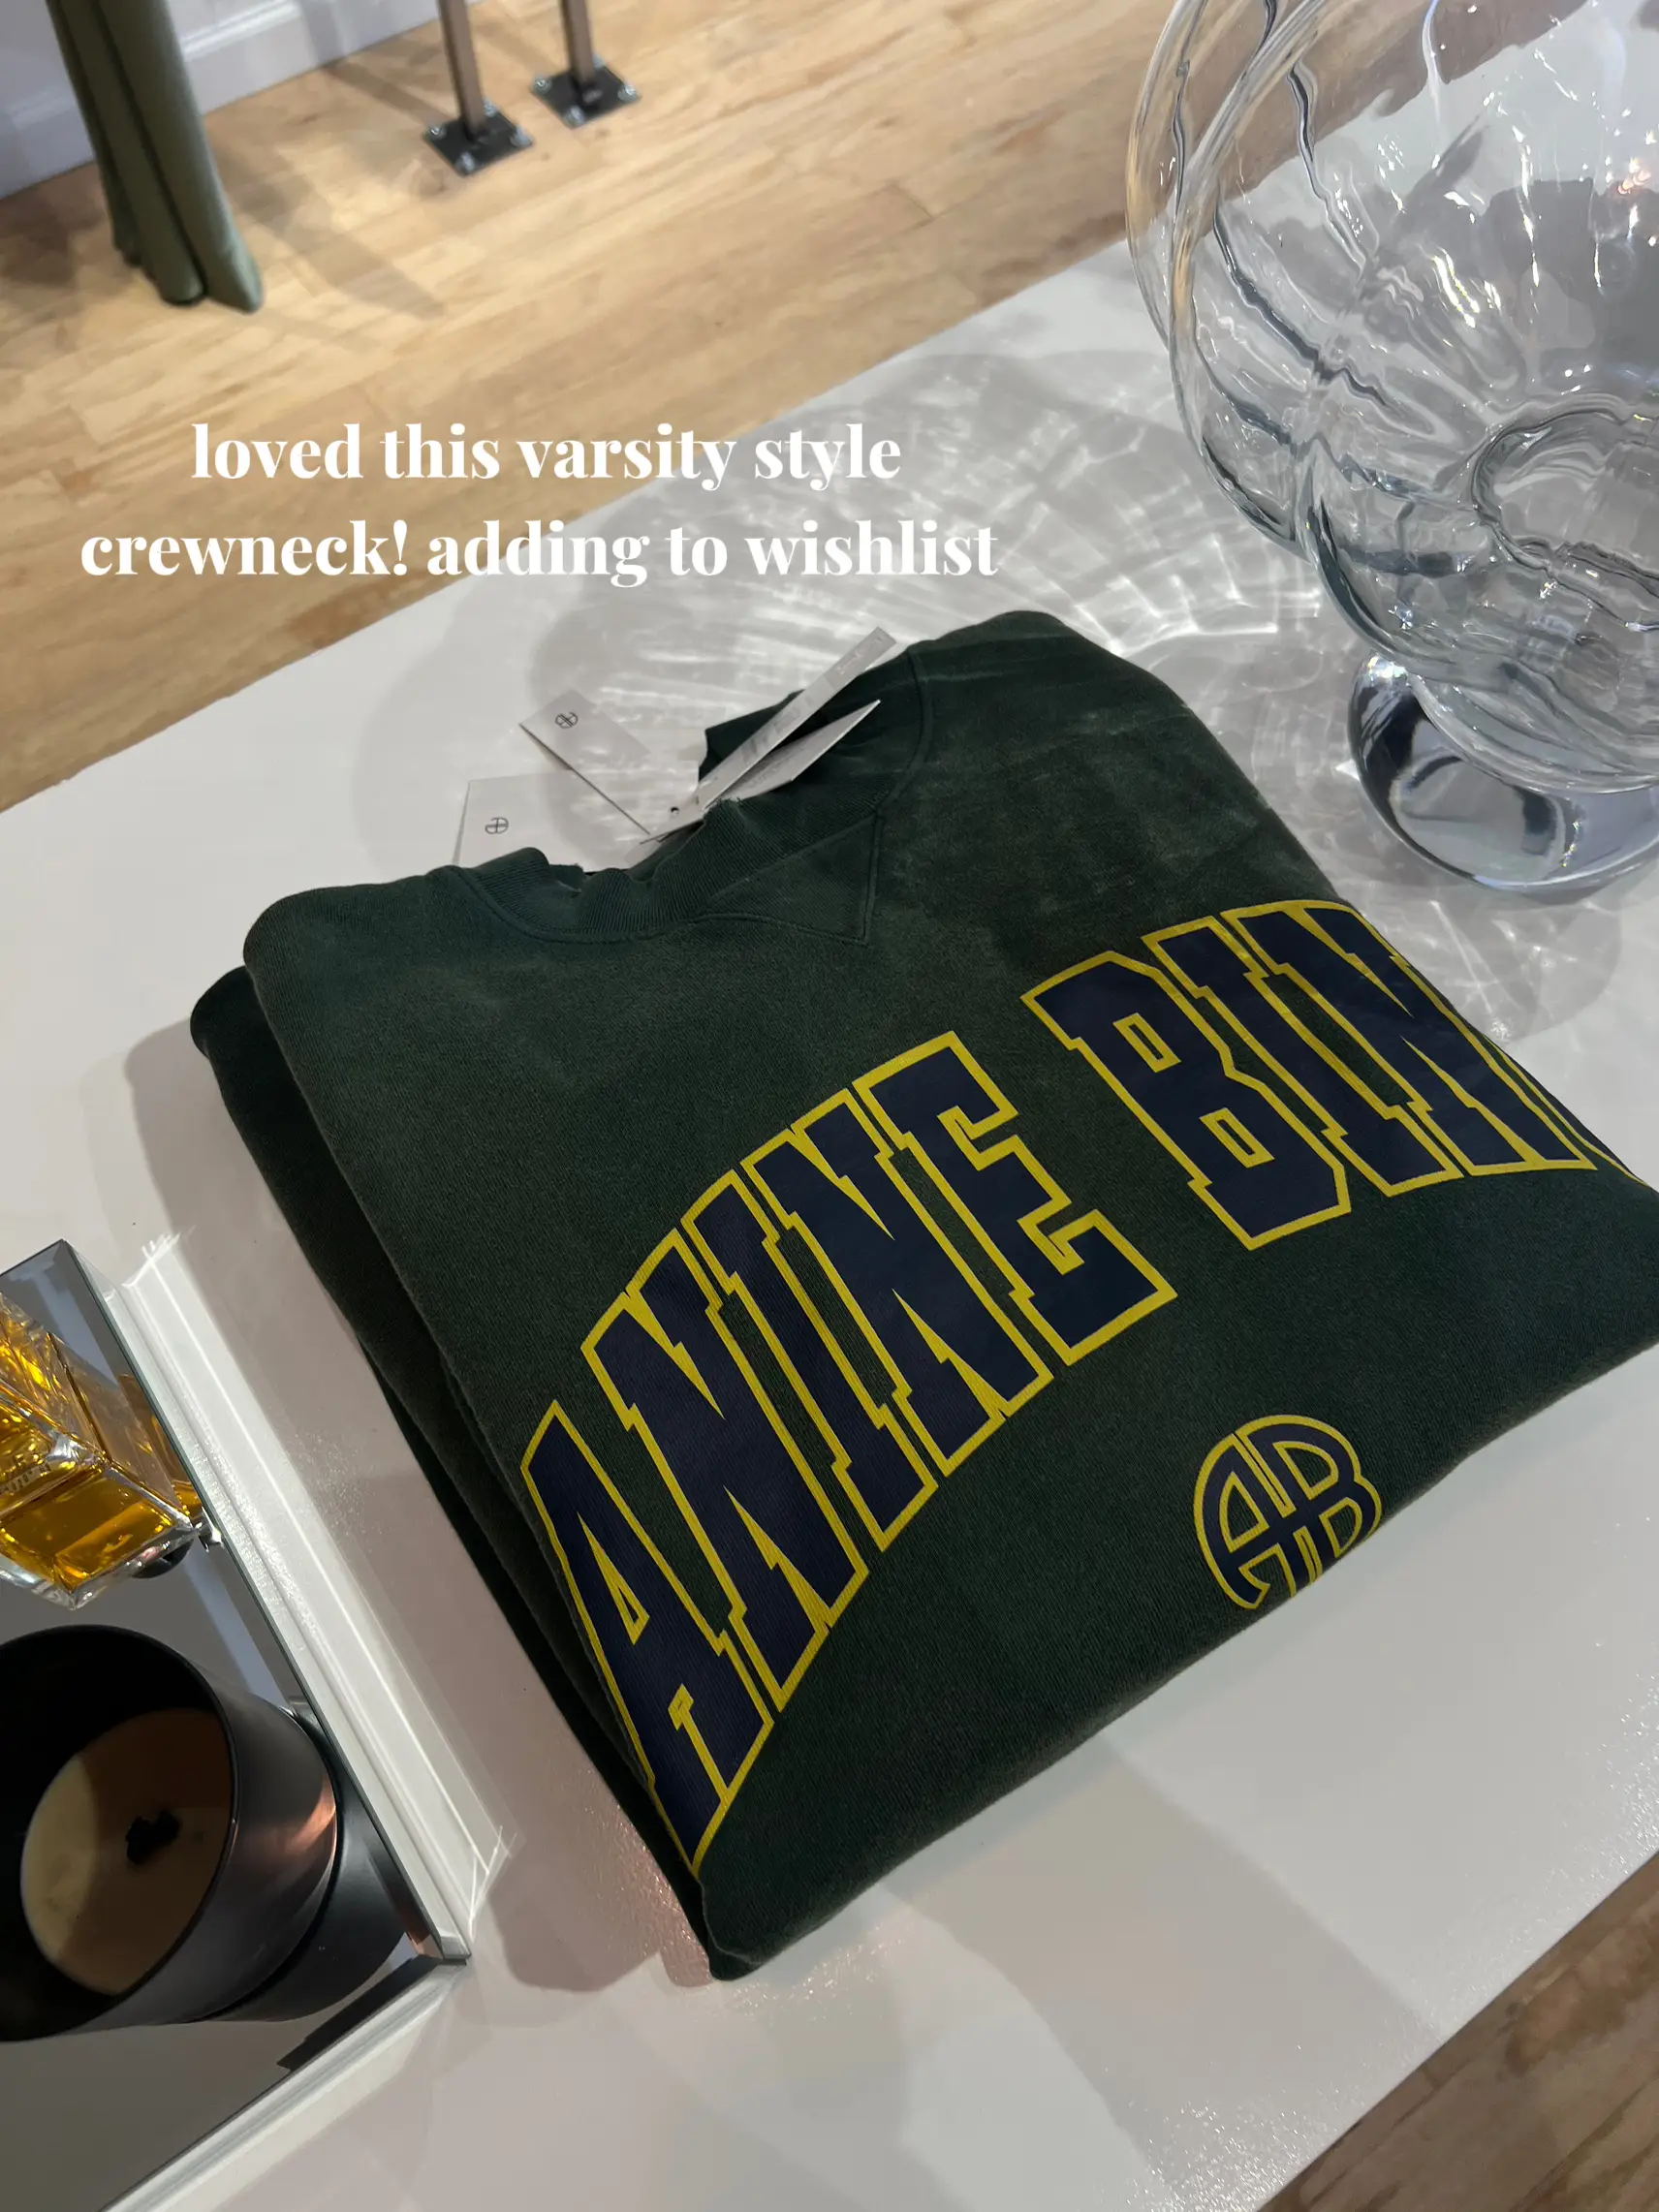 Anine Bing - Anine Bing Sport SET Velvet Sweatsuit XS/S on Designer Wardrobe